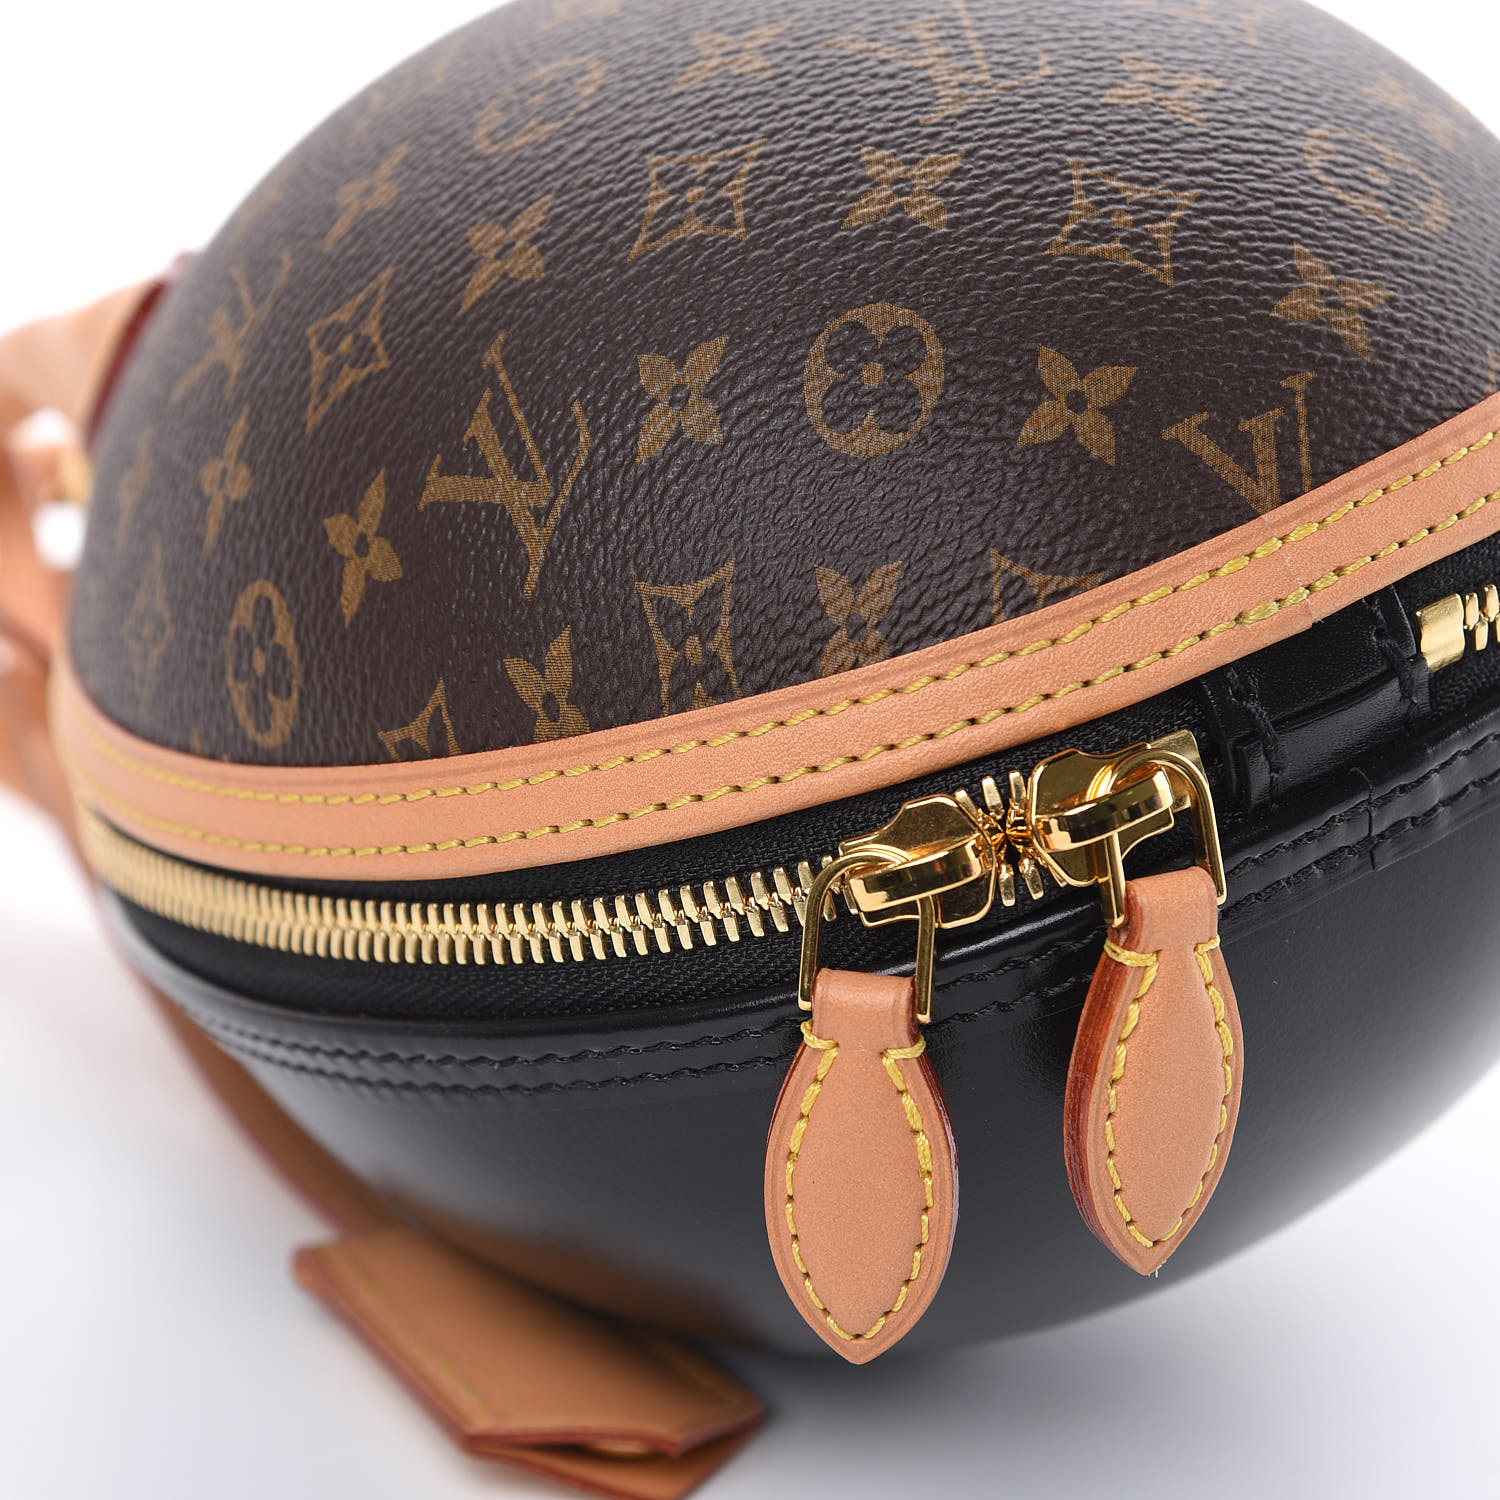 Louis Vuitton - LV EGG CASE - LV EGG Mini BAG - Monogram